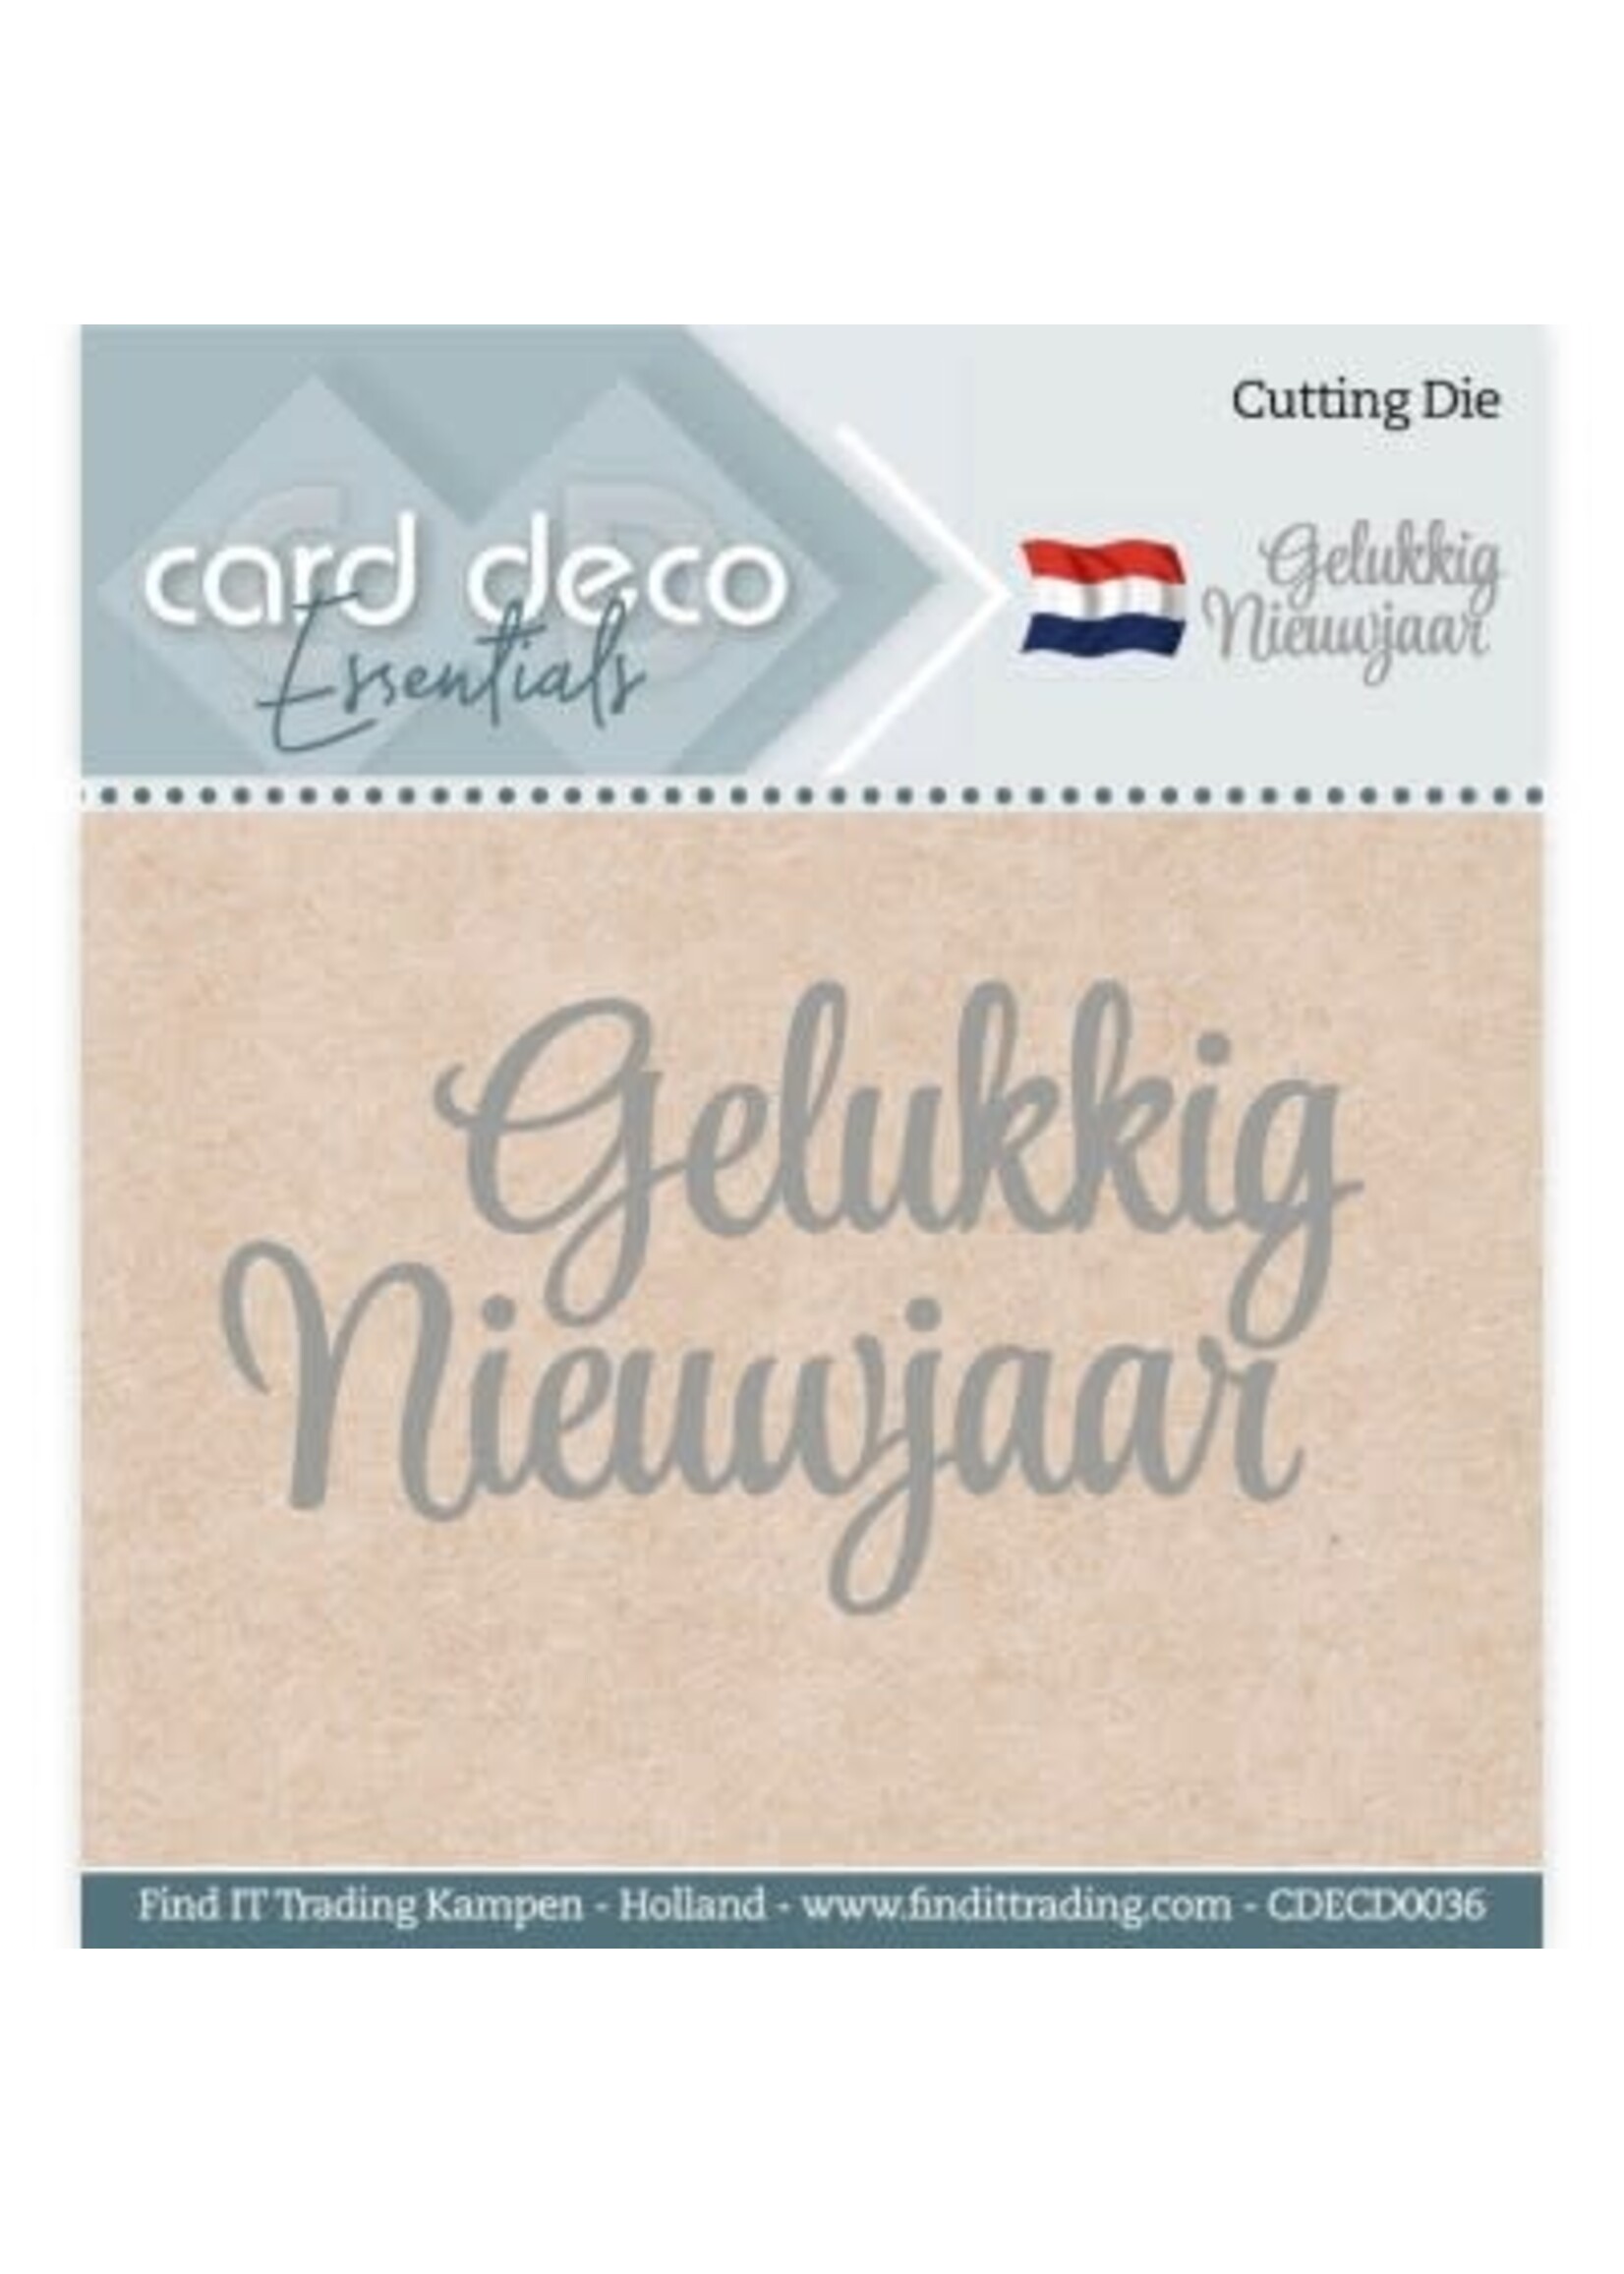 carddeco Gelukkig Nieuwjaar Cutting Dies By Card Deco Essentials